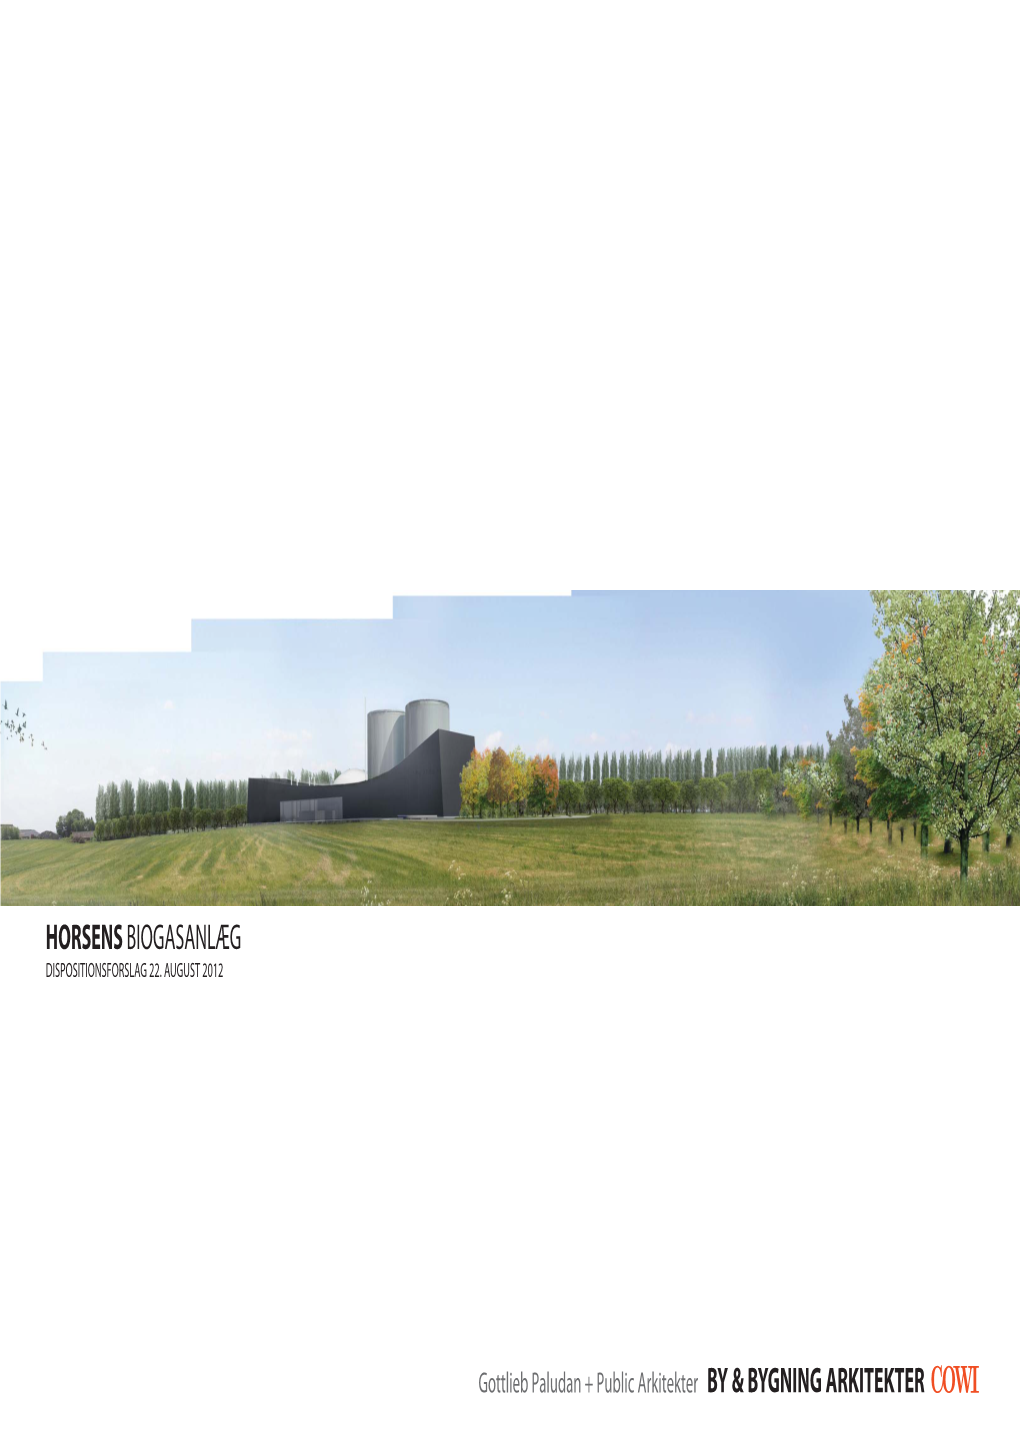 Horsens Biogasanlæg by & Bygning Arkitekter